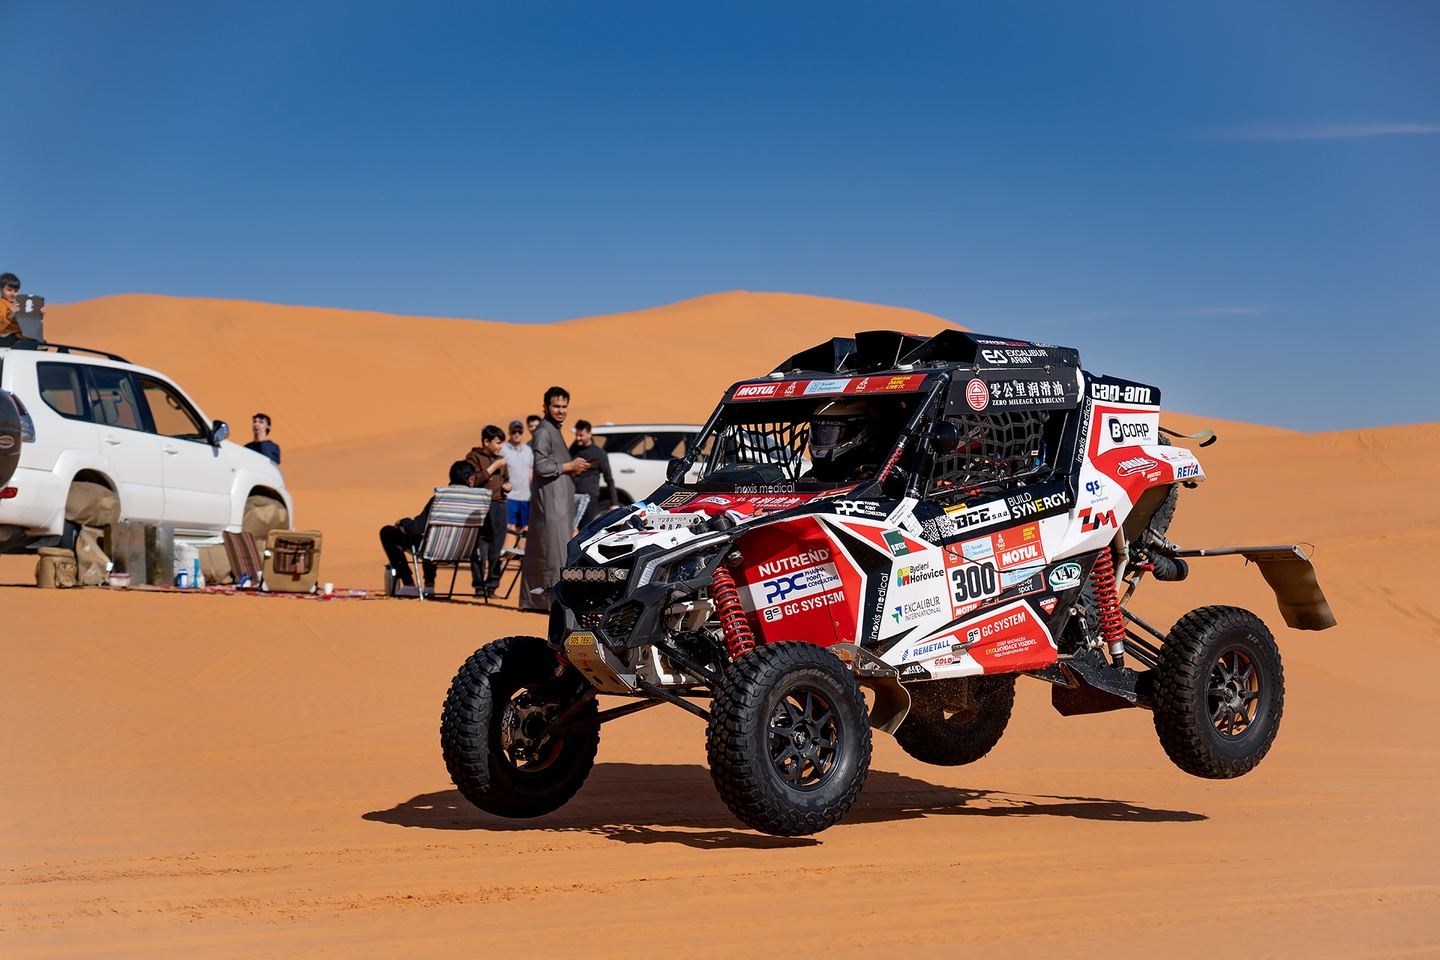 Dakar Adventure - meet the Dakar Rally on an offroad tour with an Enduro  Bike, 4x4, Buggy (side by side) or an Adventure Bike.